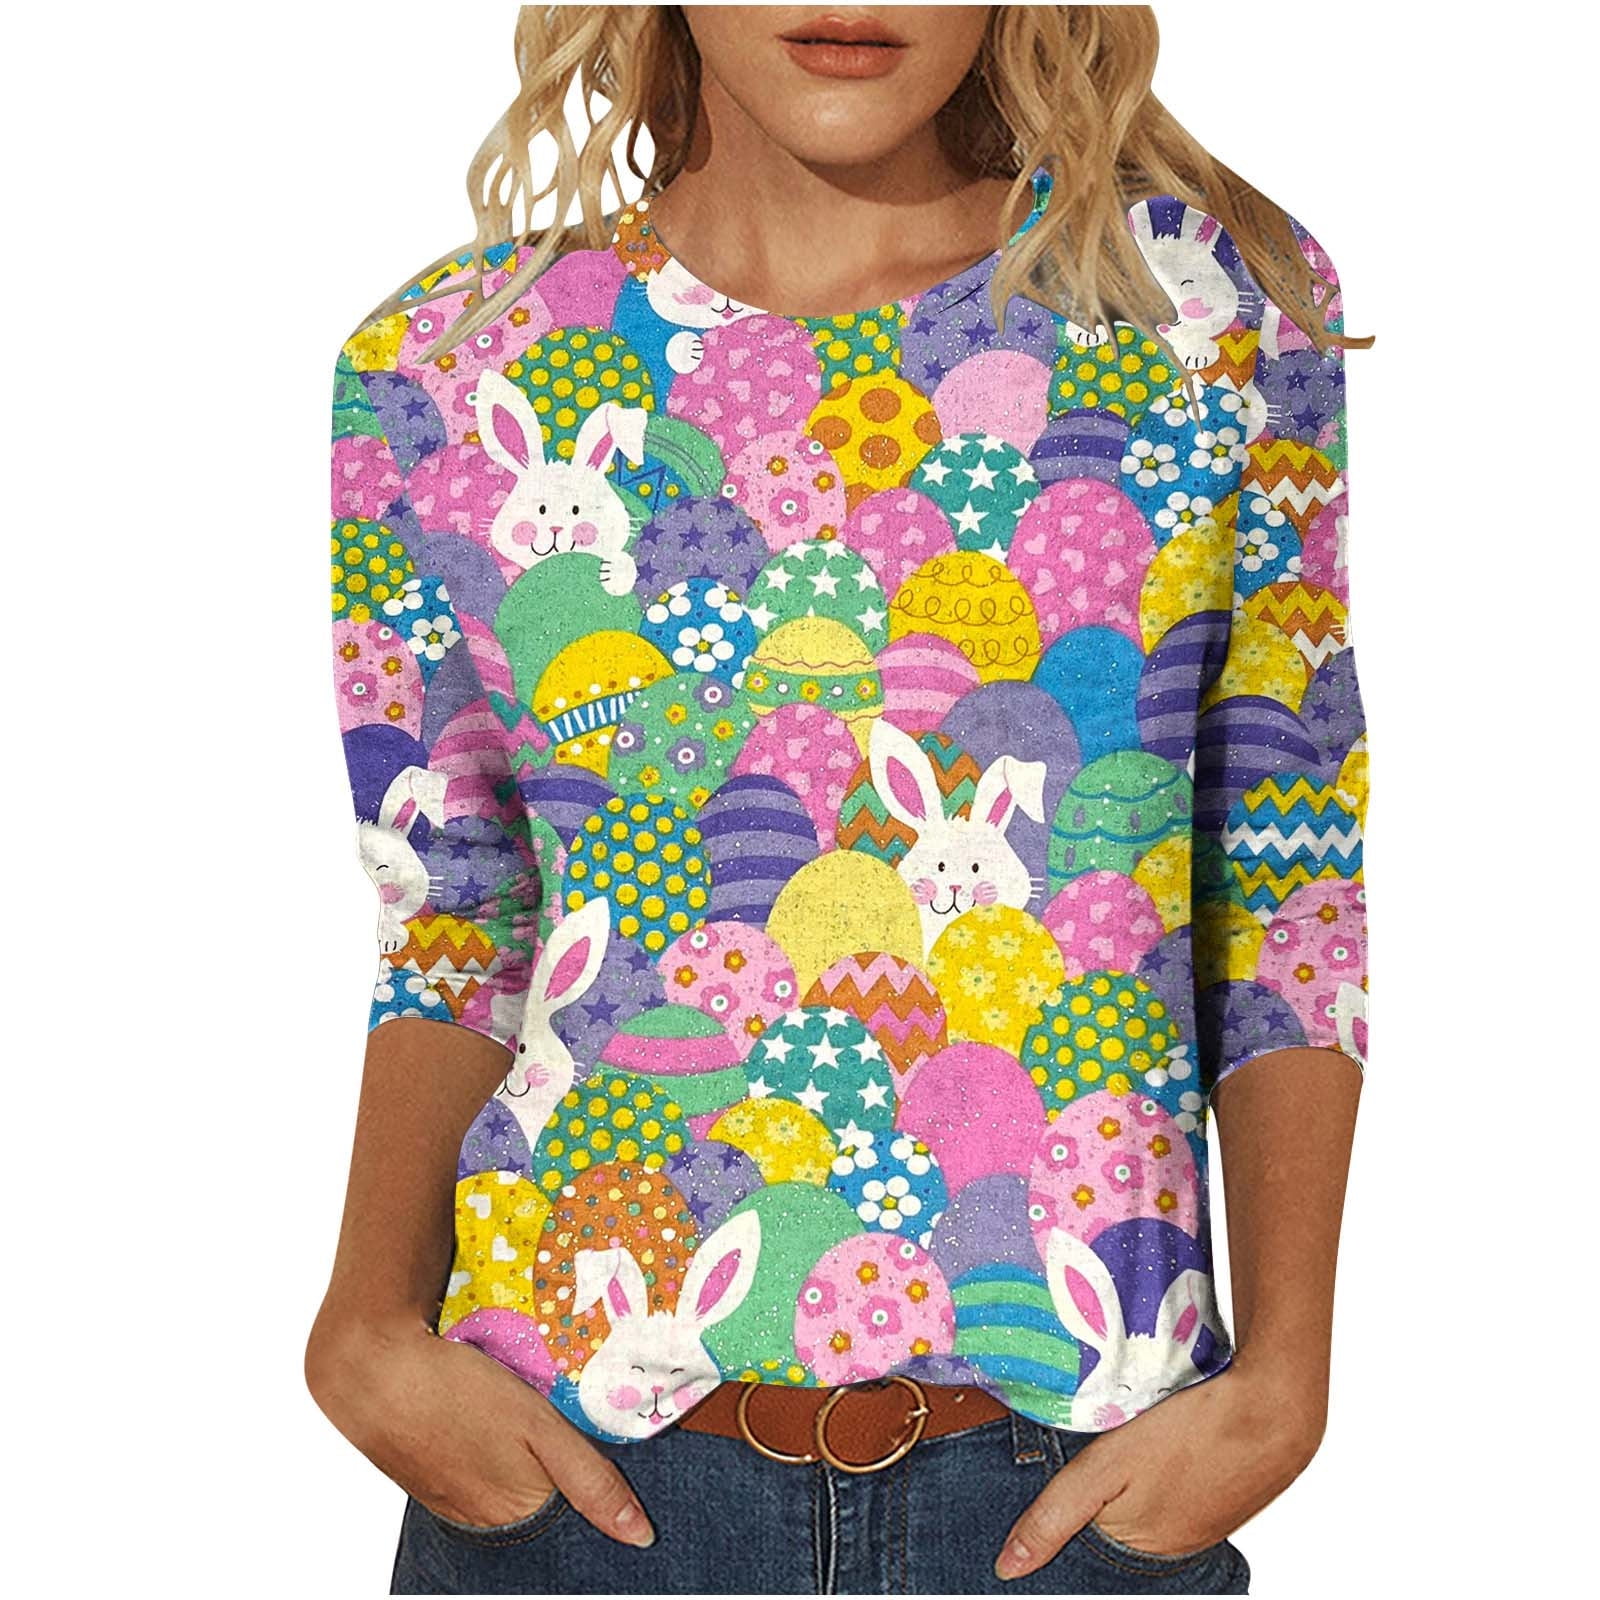 RYRJJ Easter Shirts for Women Easter Eggs Bunny T-Shirt Rabbit Graphic ...